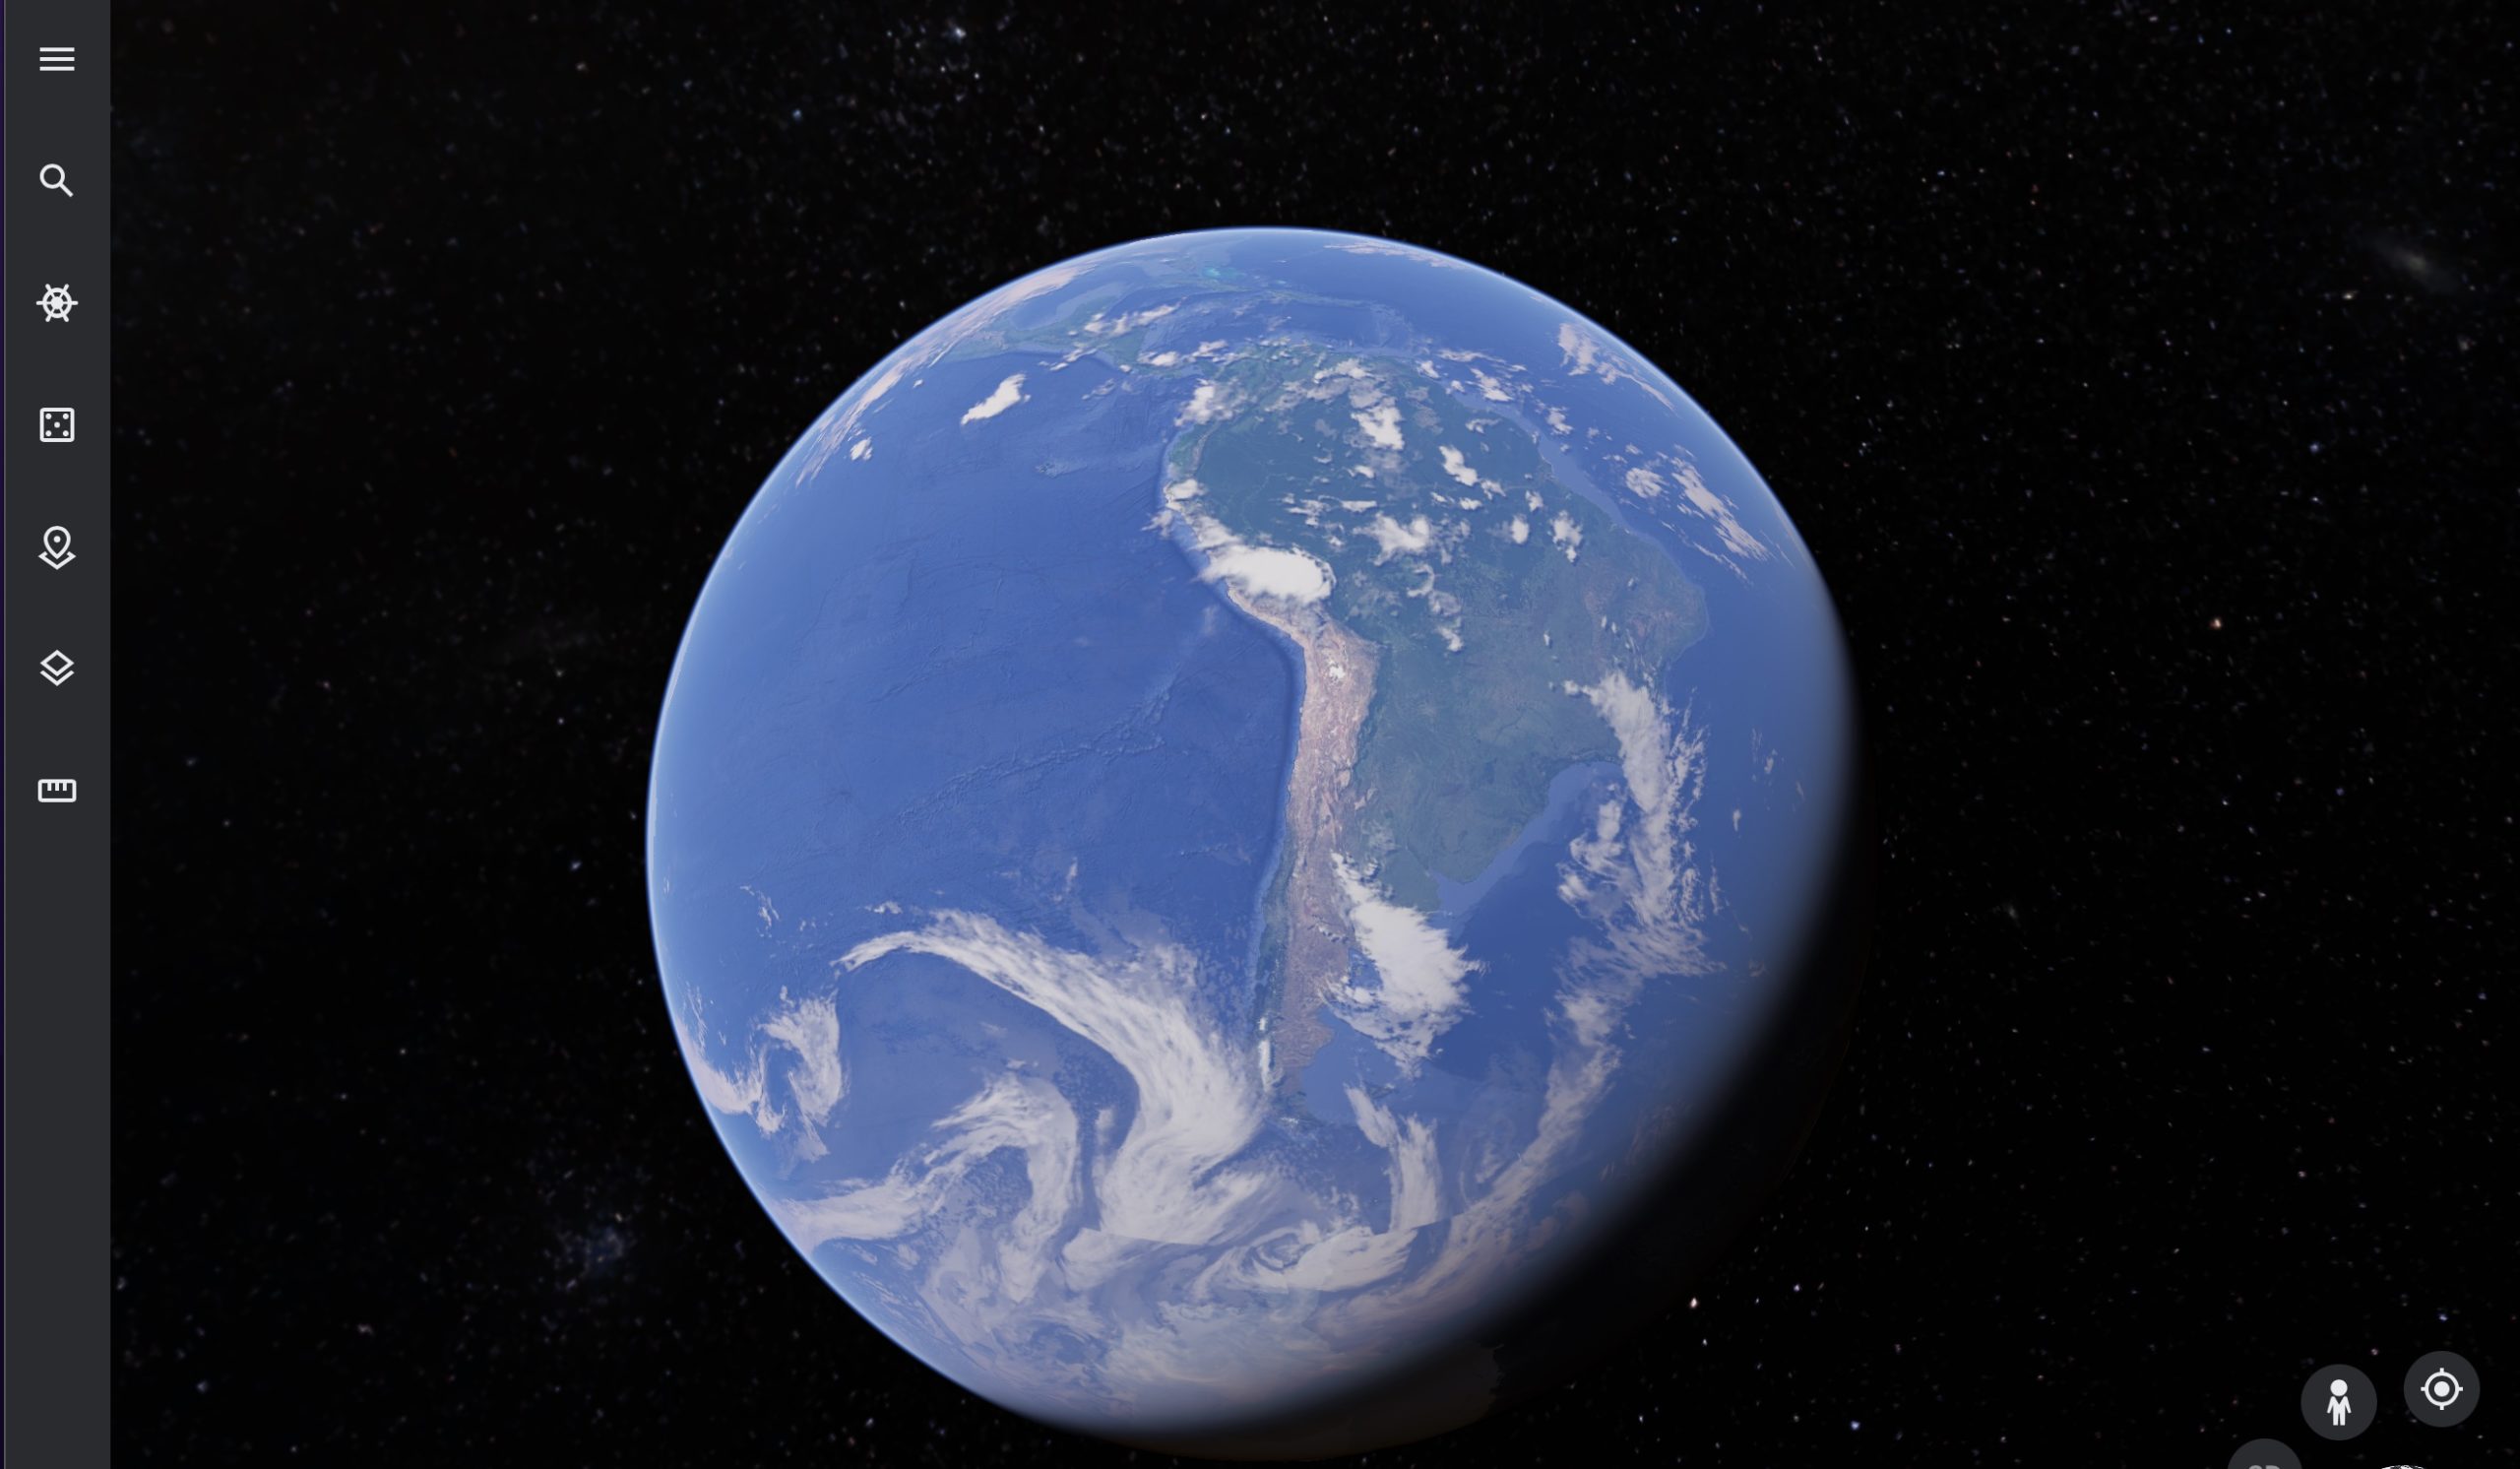 Google Earth တွင် လက်ရှိ ဟာရီကိန်းဒေတာကို မည်သို့ကြည့်ရှုနိုင်မည်နည်း။